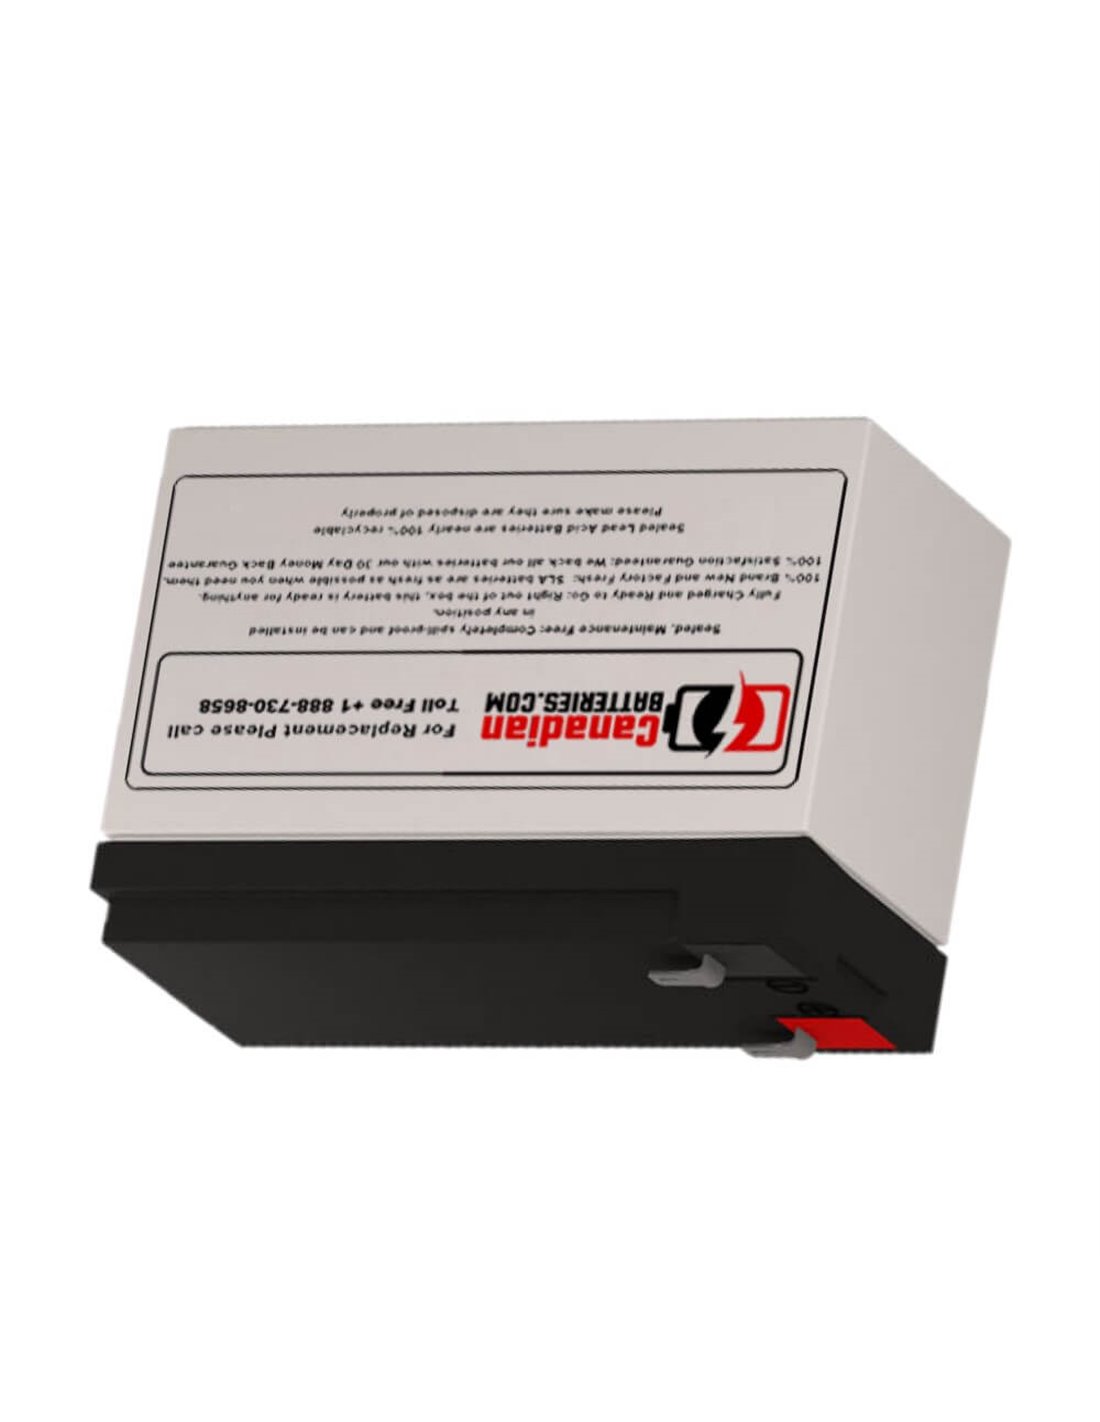 Battery for Powercom Black Knight Pro Bnt-800ap UPS, 1 x 12V, 7Ah - 84Wh